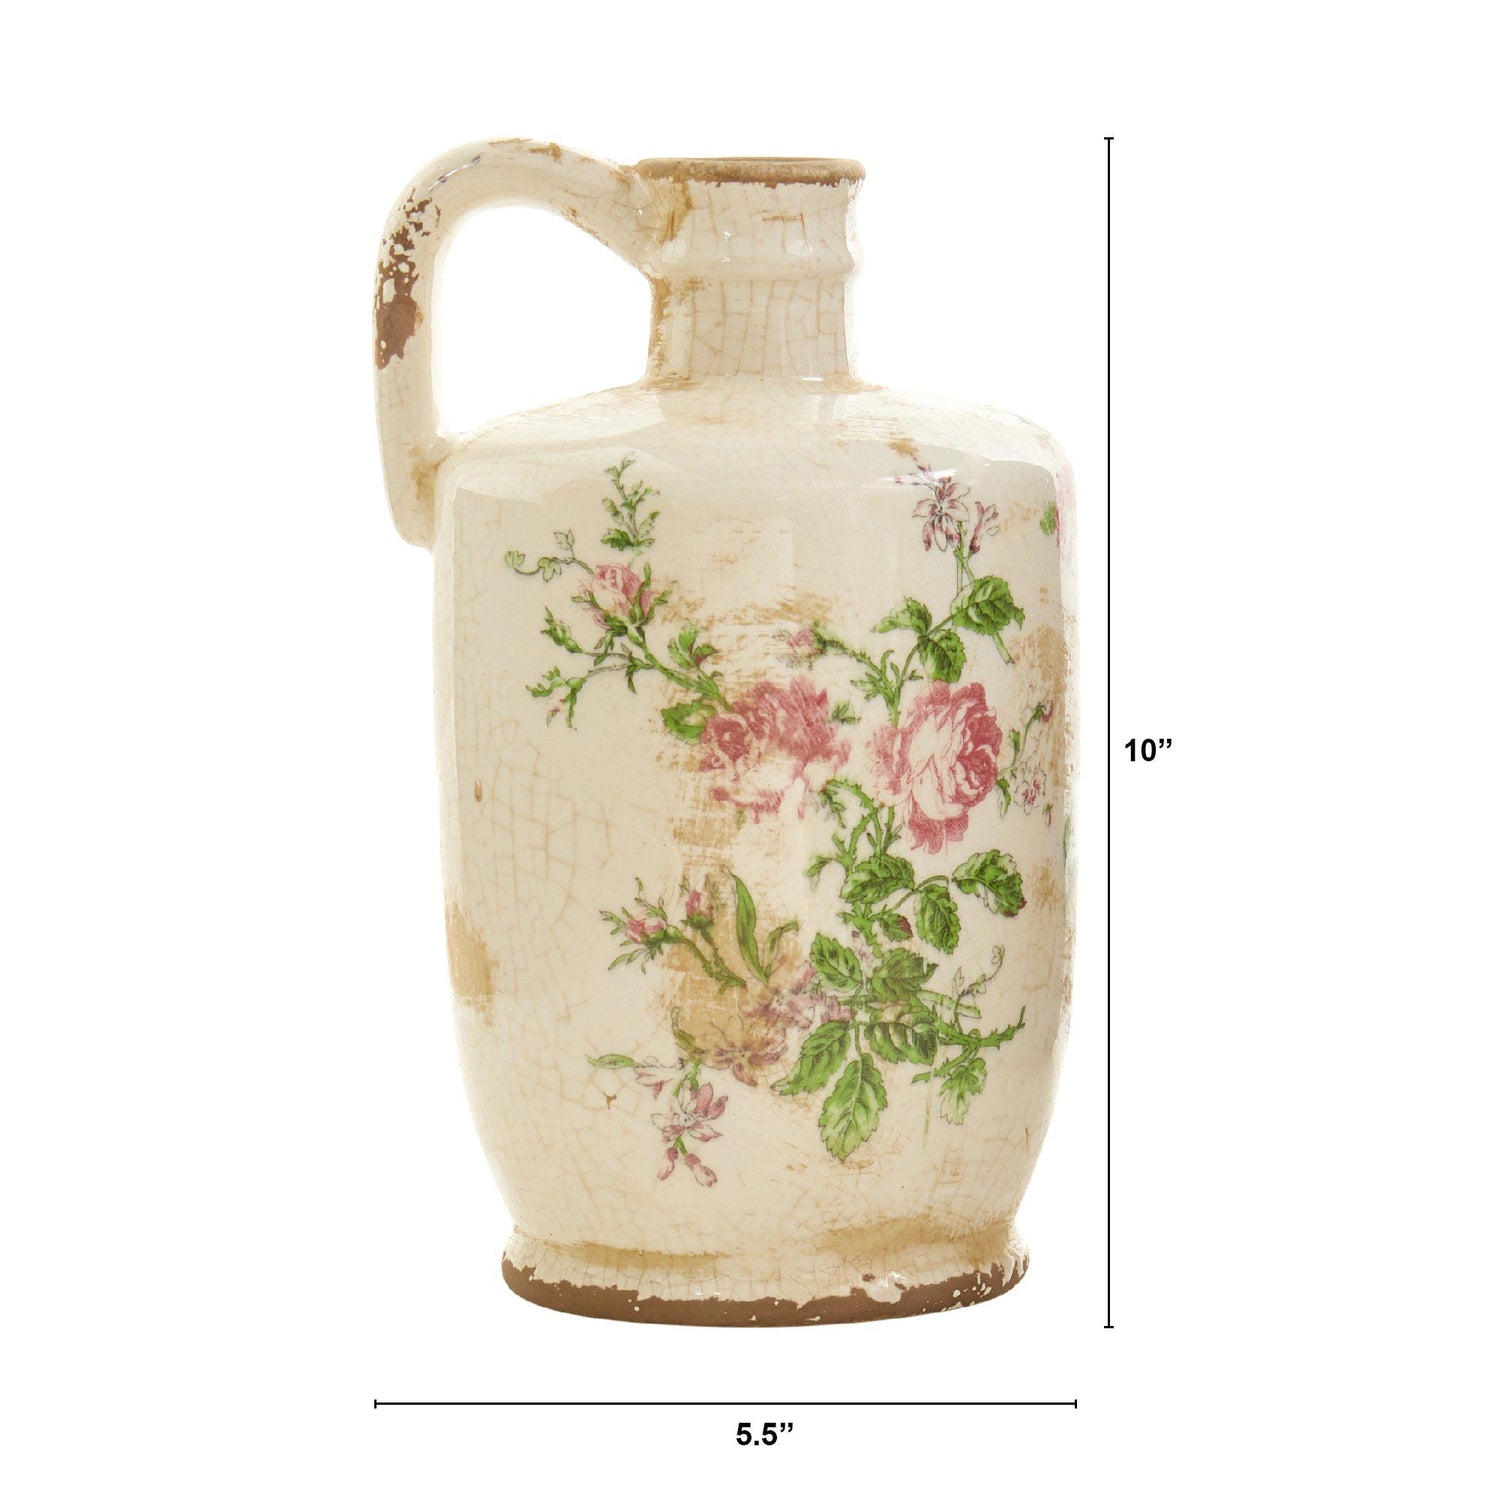 10” Tuscan Ceramic Floral Print Pitcher